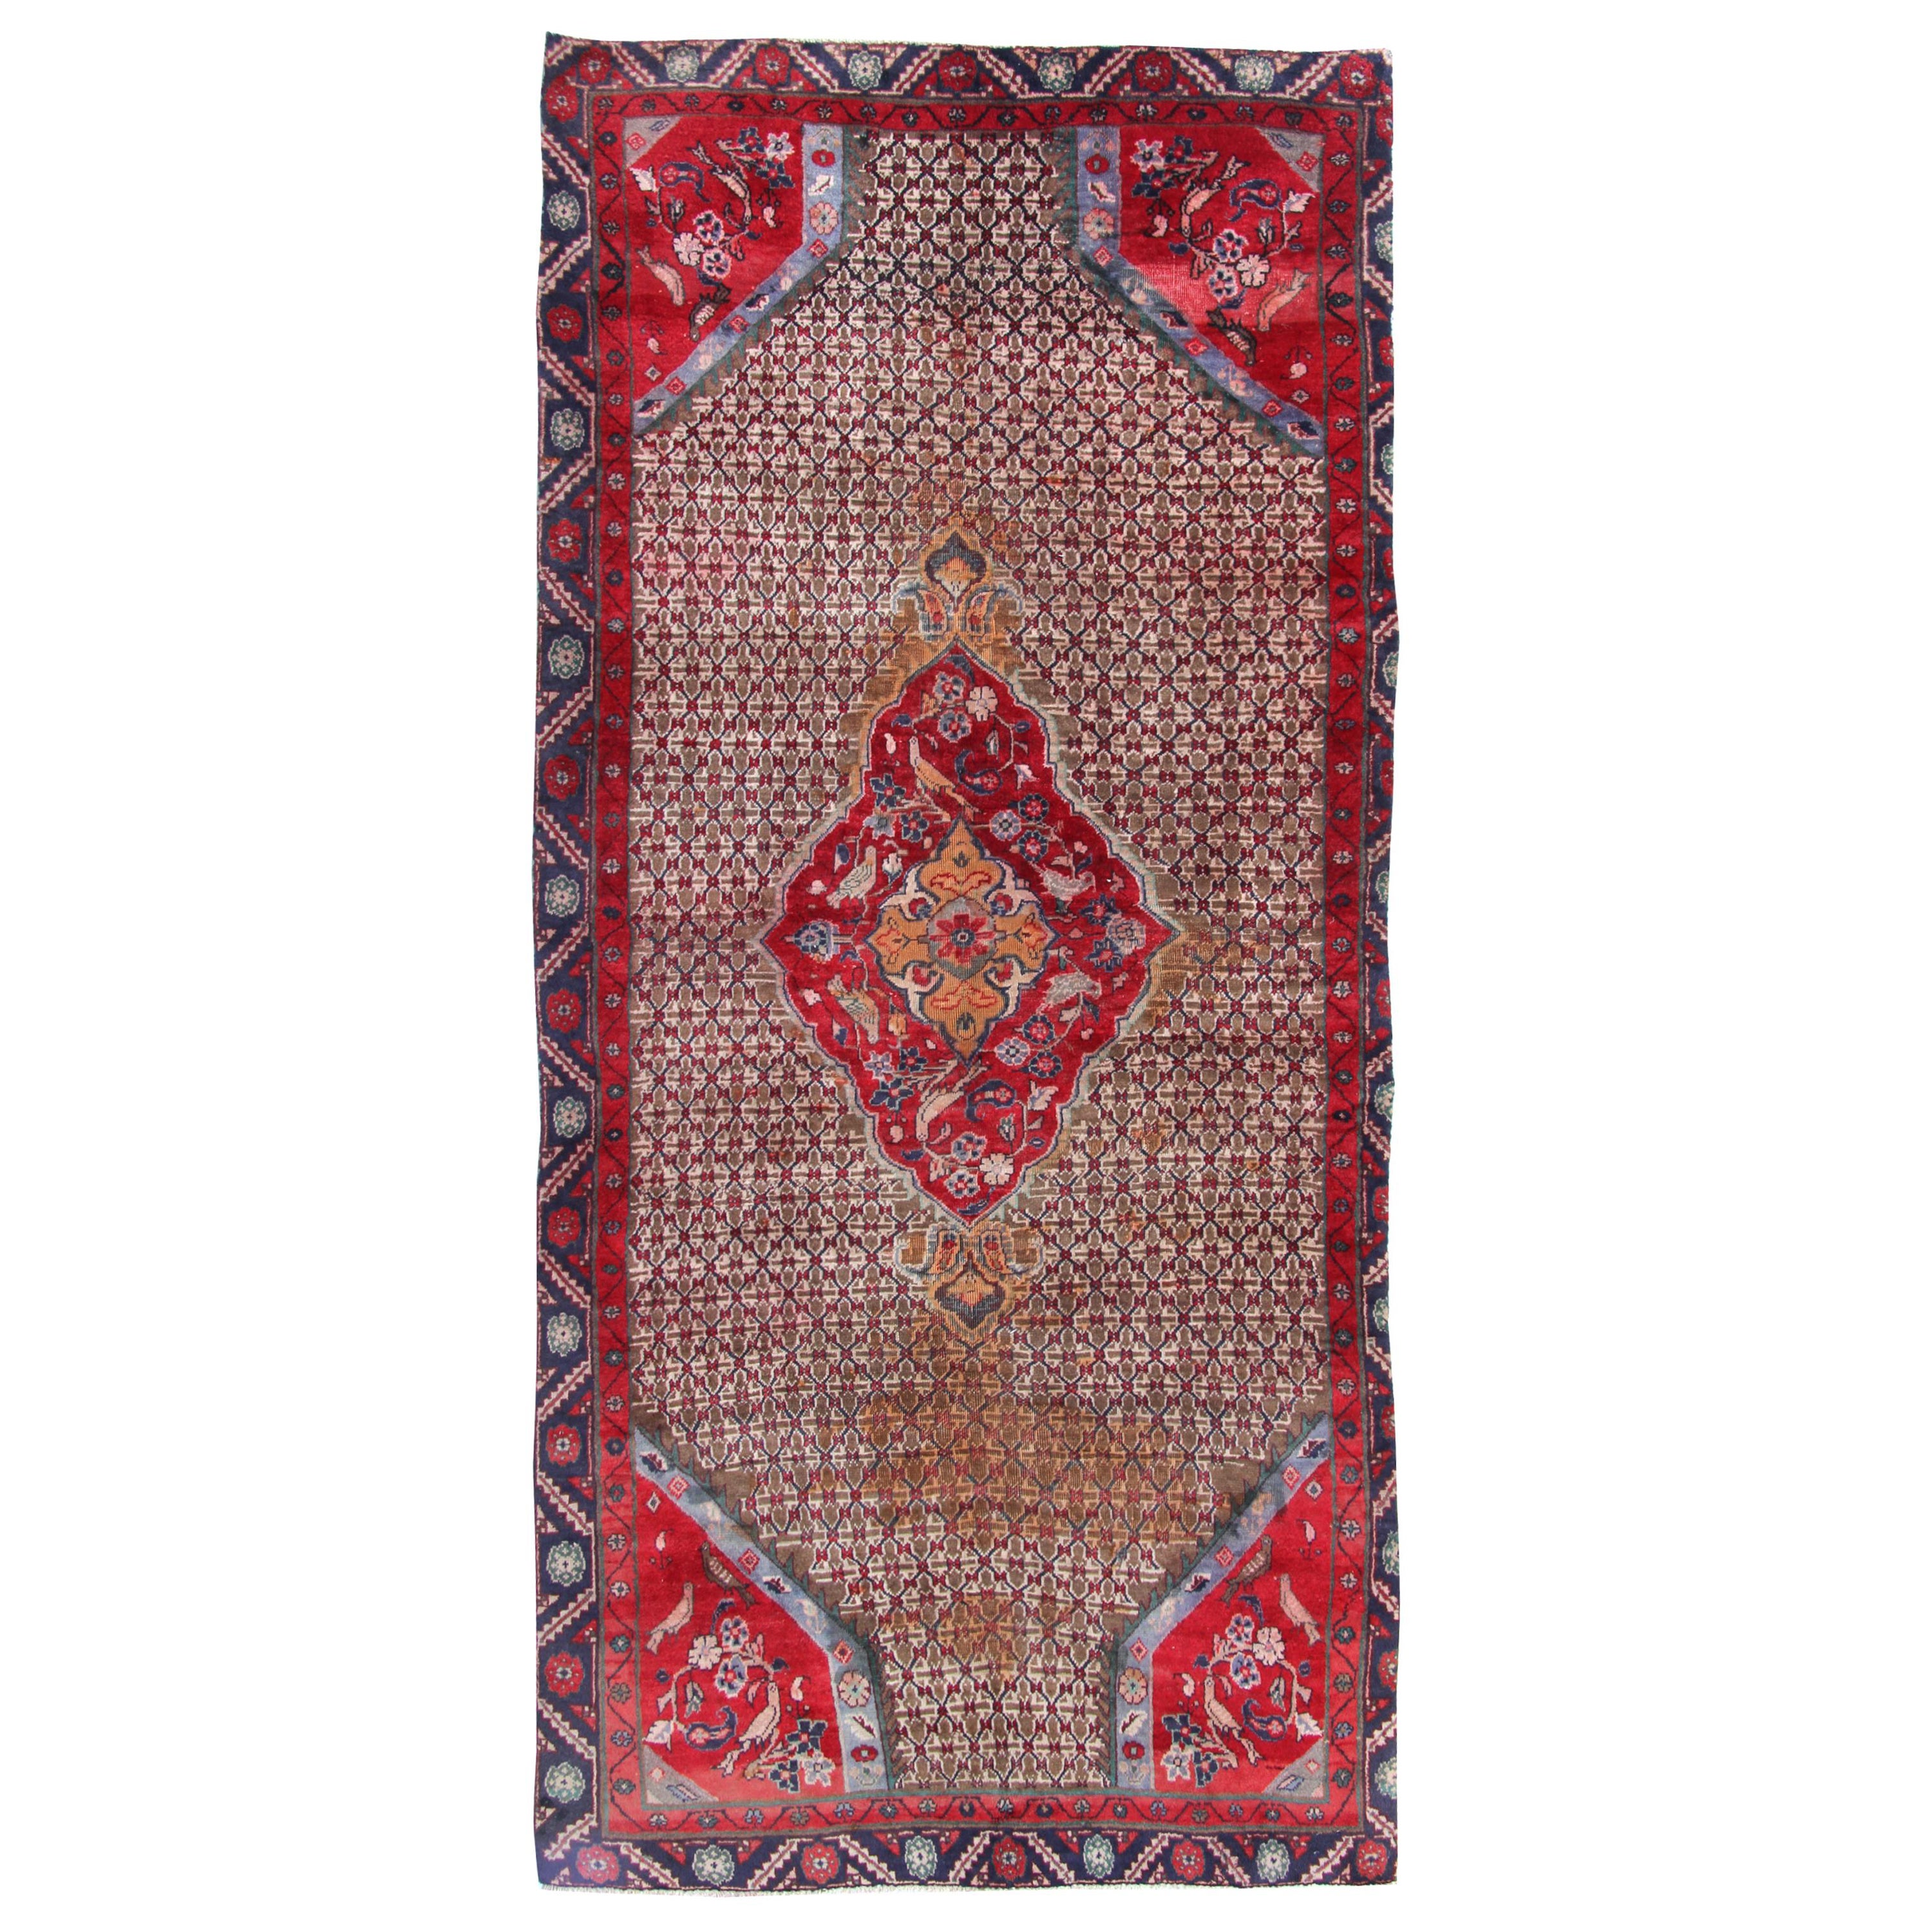 Handwoven Red Wool Runner Rug Long Traditional Oriental Vintage Carpet